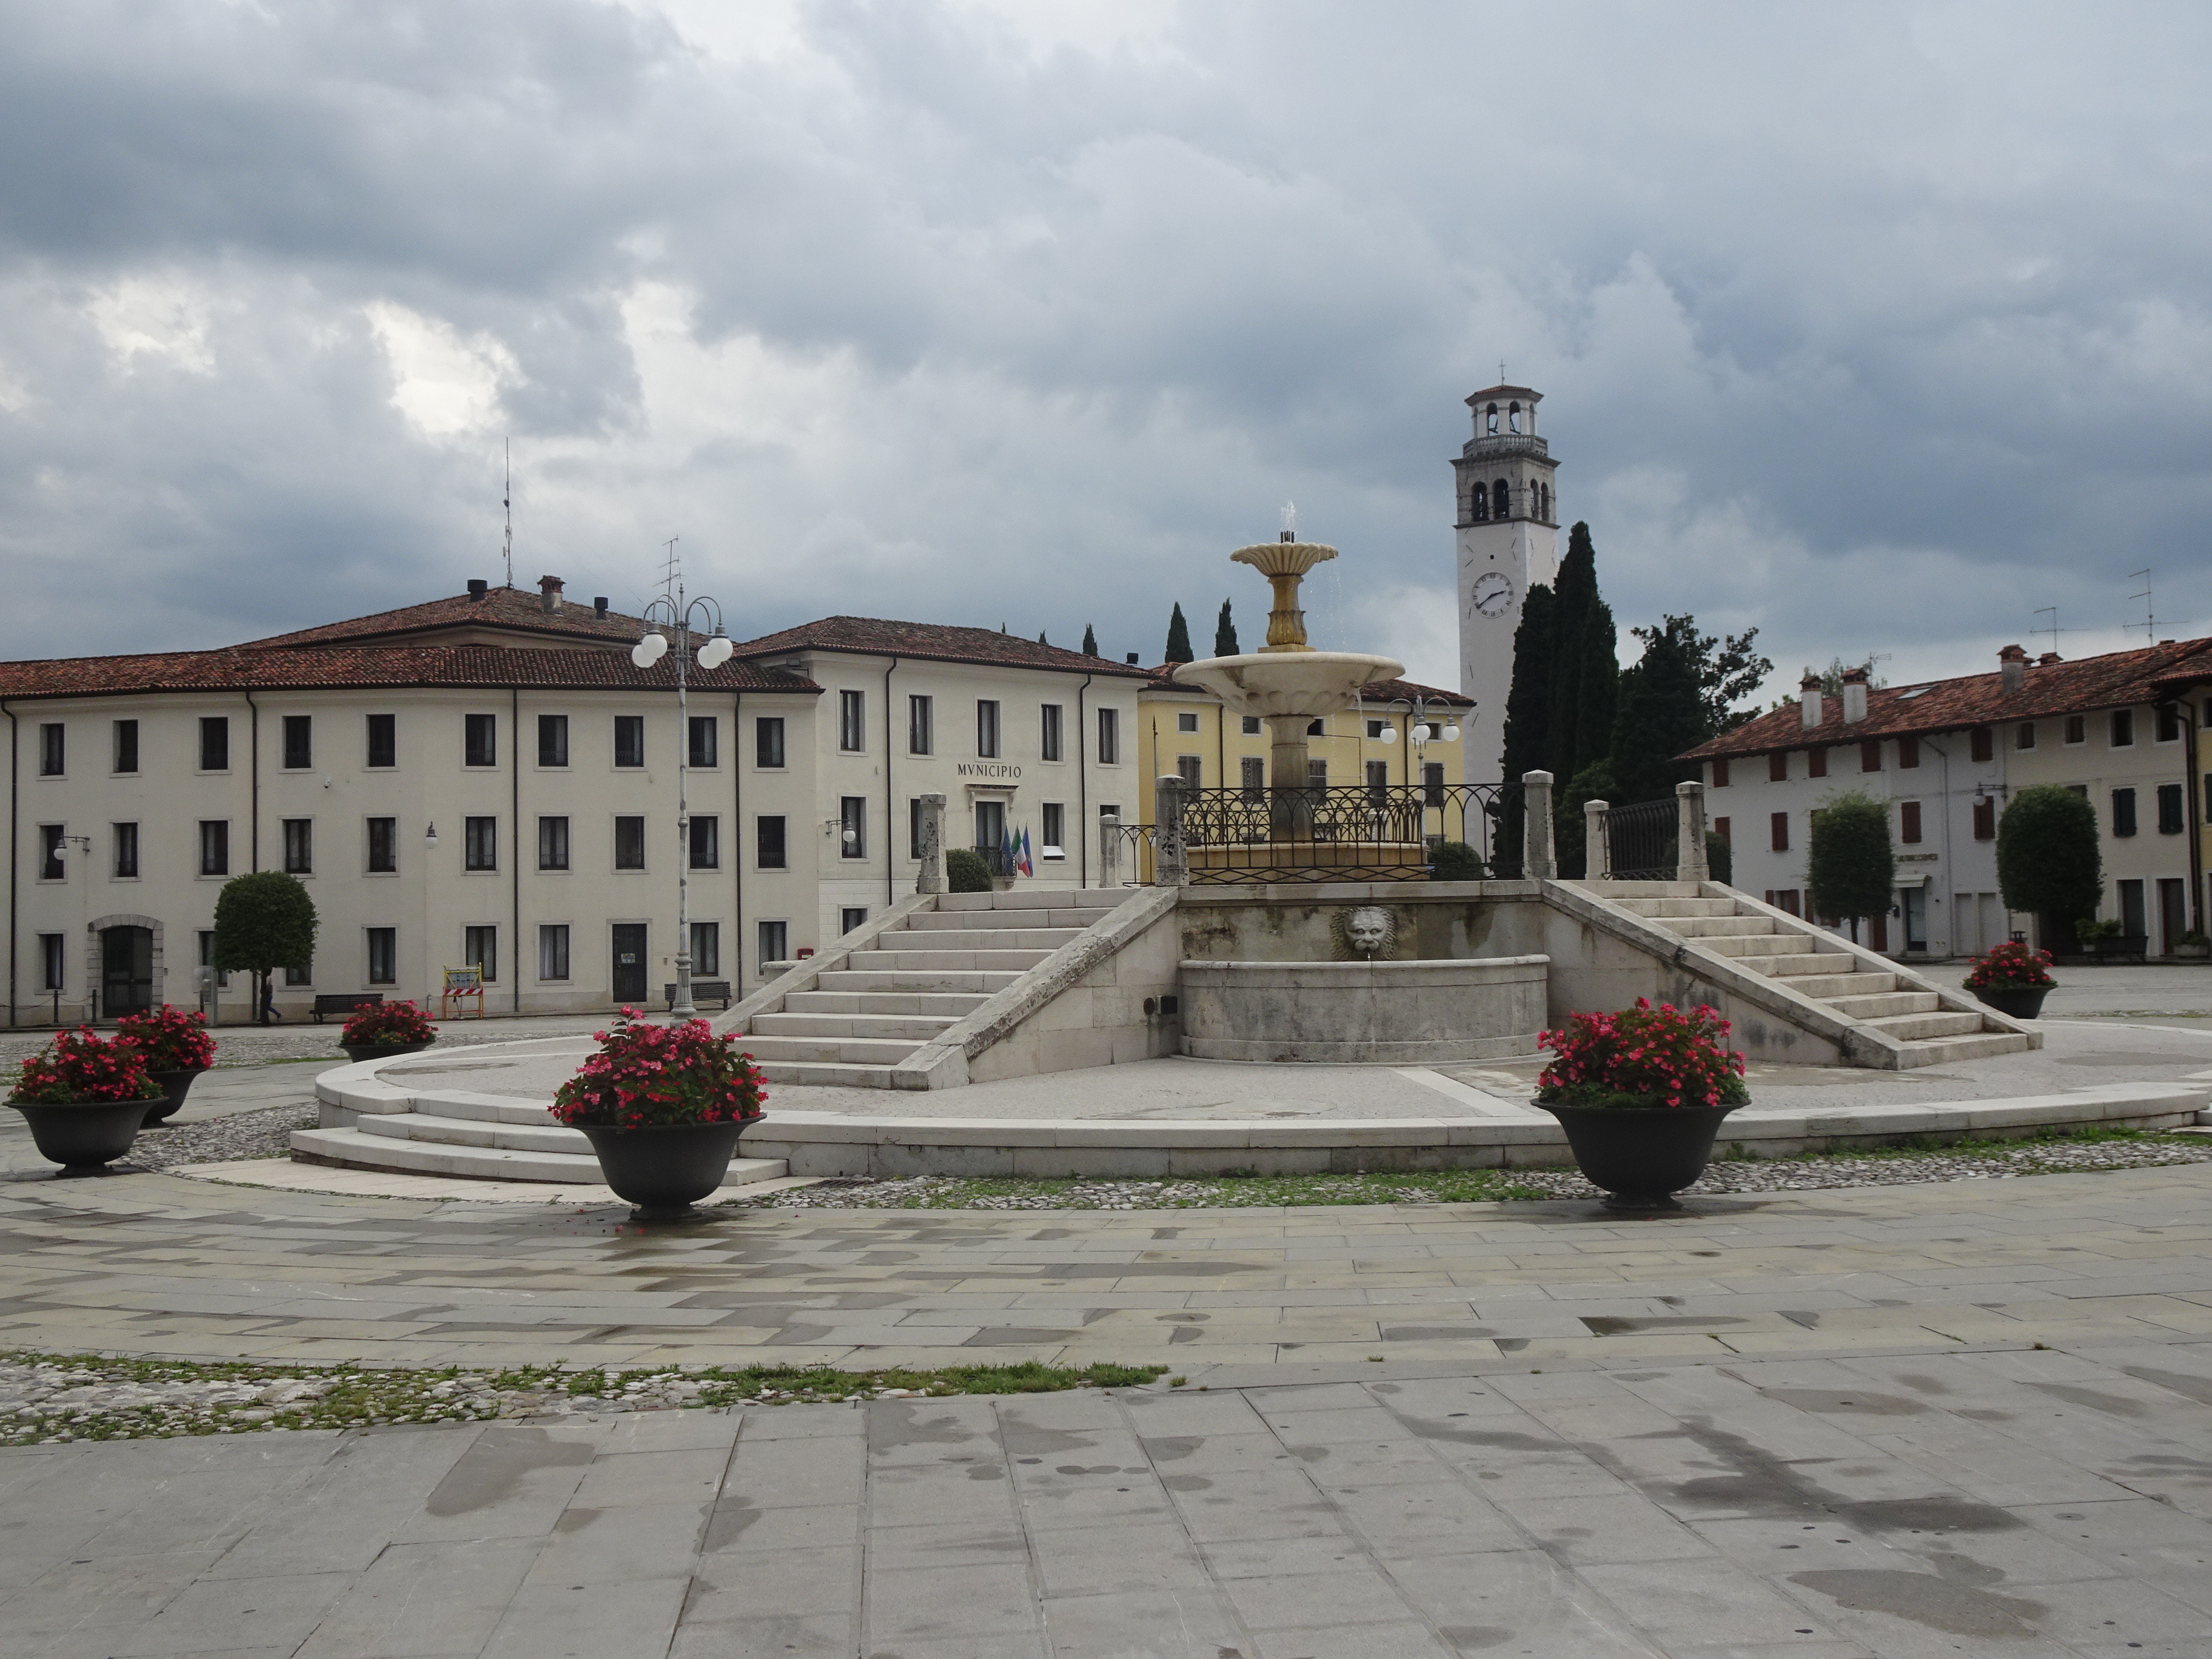 File:Maniago Piazza Italia.jpg - Wikimedia Commons